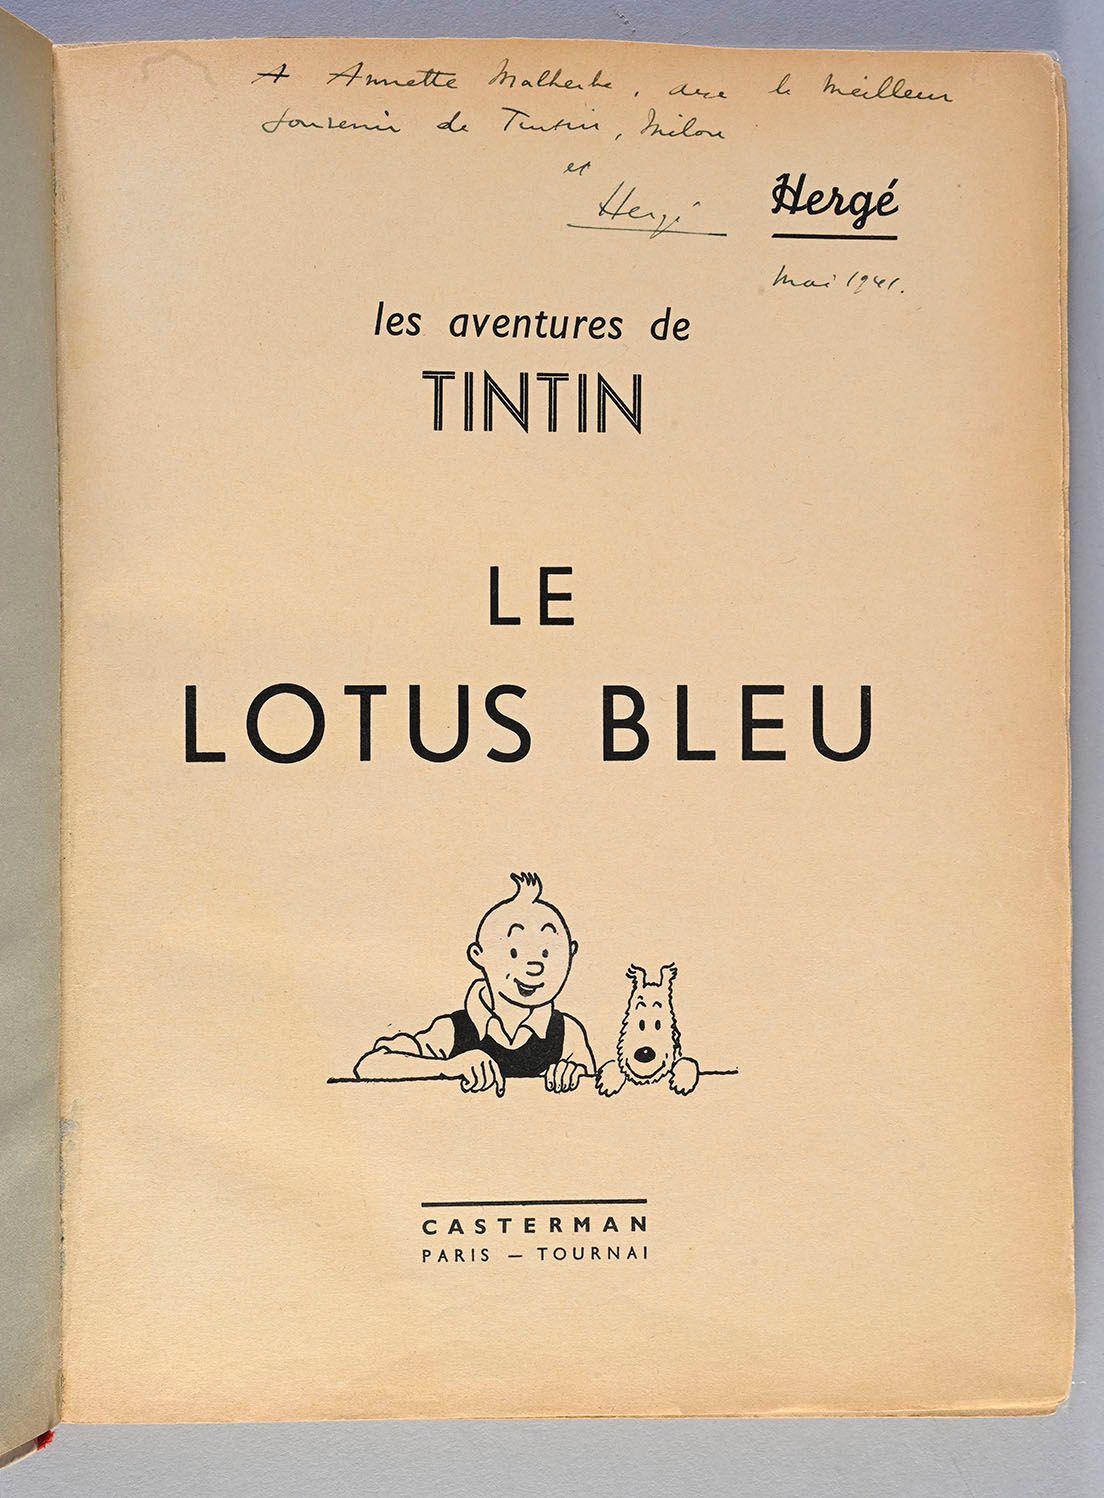 HERGÉ TINTIN 05. LE LOTUS BLEU DEDICACE. EDITION A9 - 1939. 4eme plat Petite ima&hellip;